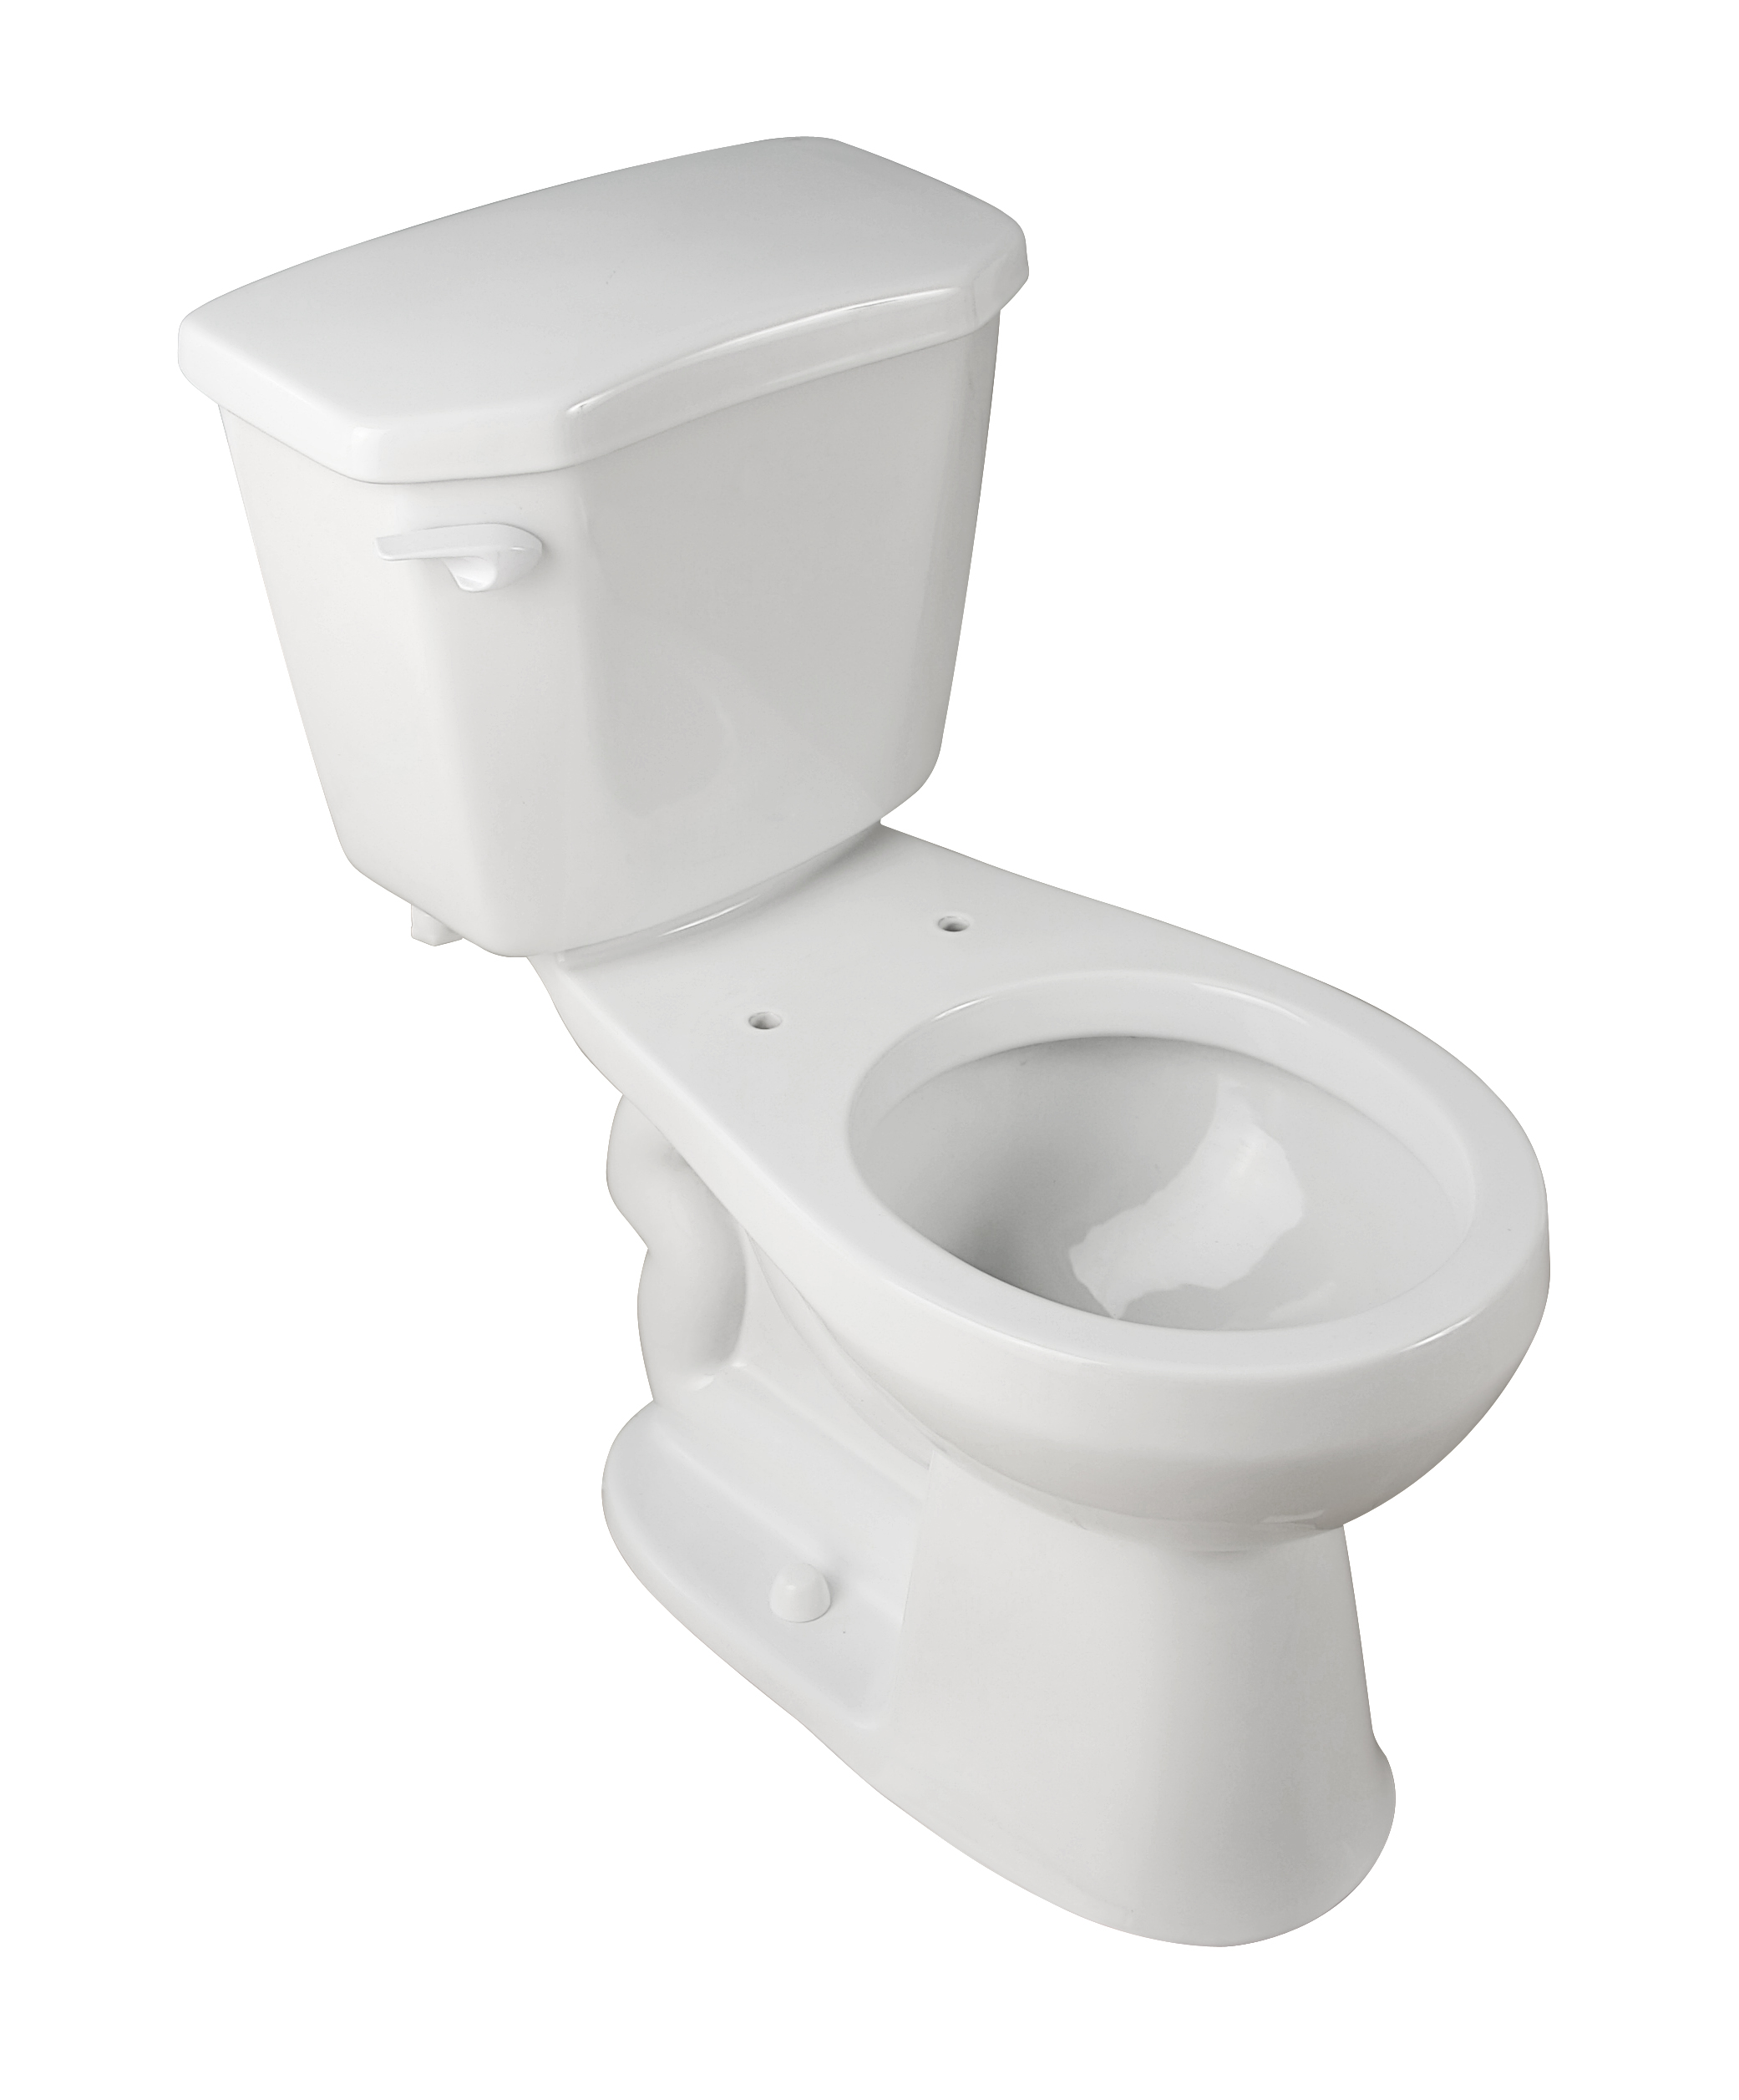 HD Supply Plumbing Seasons Residential Toilet 1.6 GPF